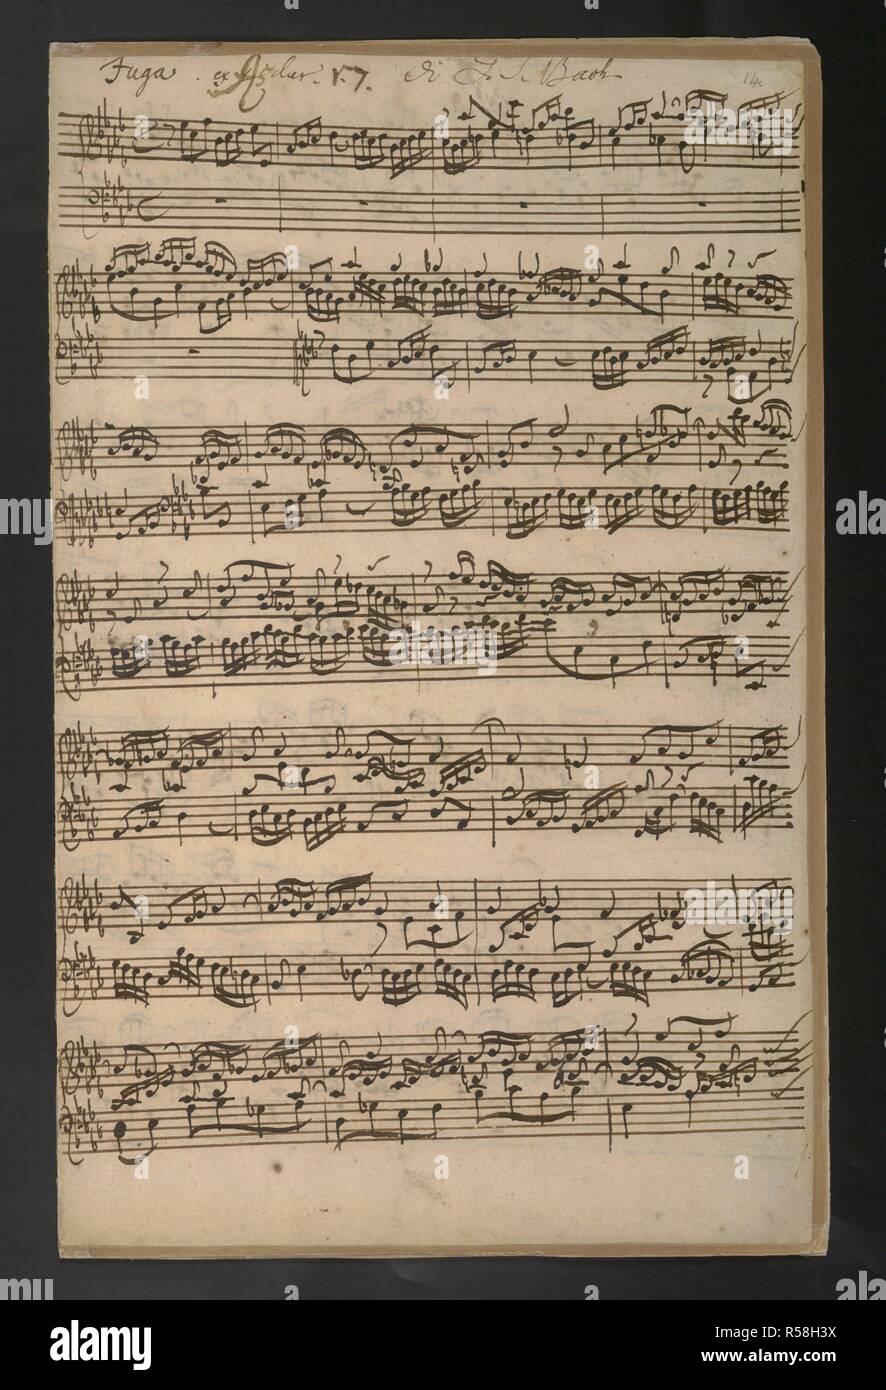 Bach: Fugue in A flat major. 'The Well-tempered Clavier'. . Johann  Sebastian Bach (1685-1750): Das Wohltemperierte Clavier, book 2. c.1744.  Fugue in A flat major, form the 'Well-Tempered Klavier', book 2. Image